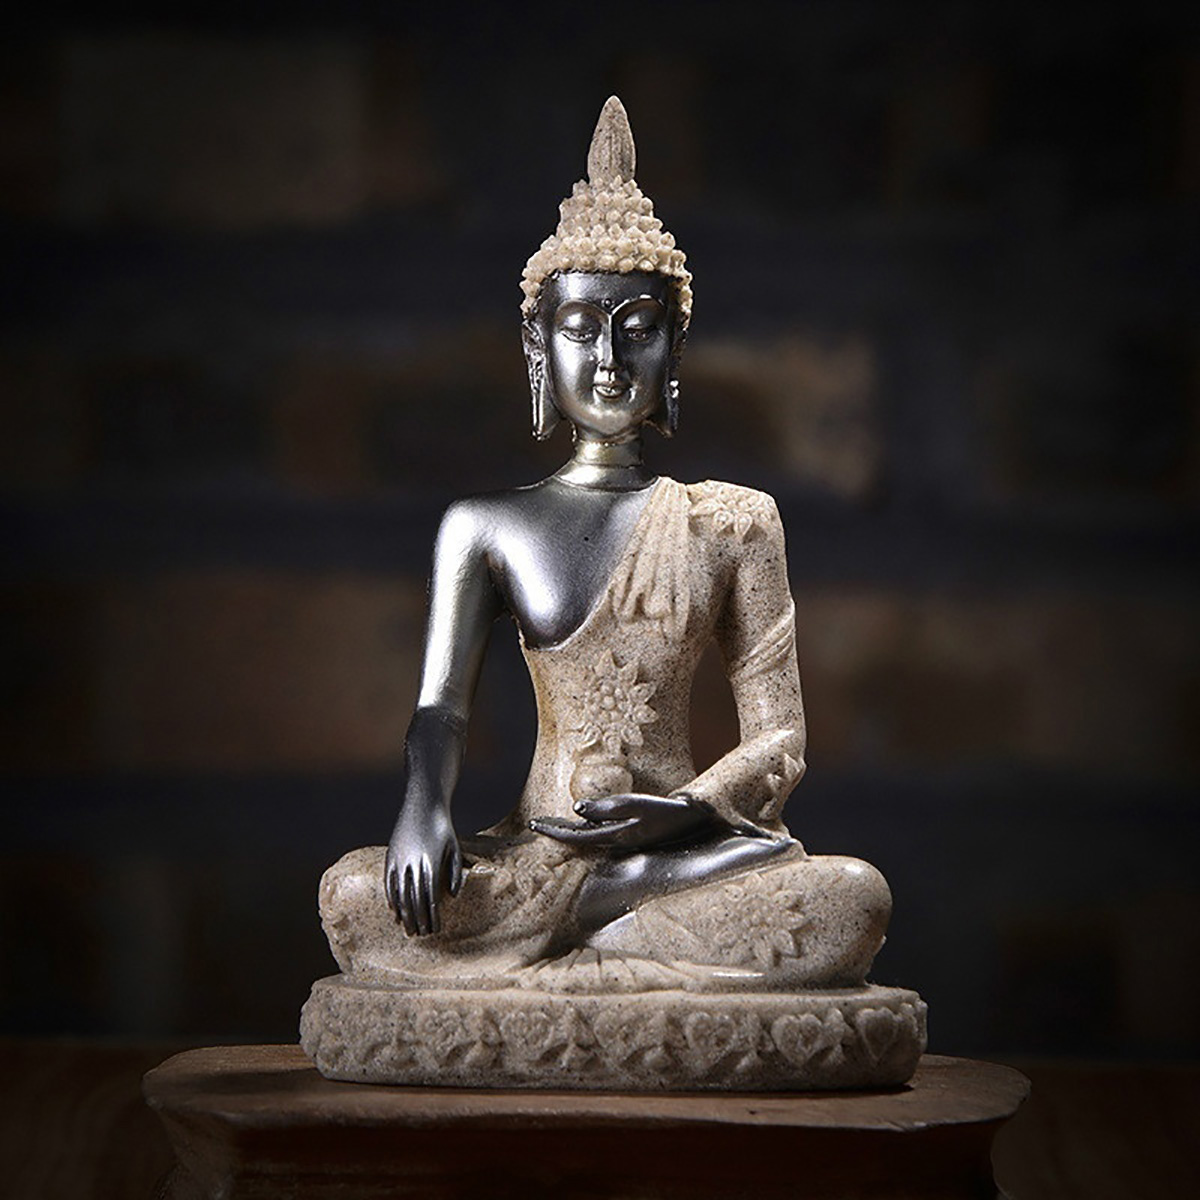 Sitting-Thai-Statue-Sculpture-Outdoor-Indoor-Statue-Ornament-Home-Decorations-1582215-4